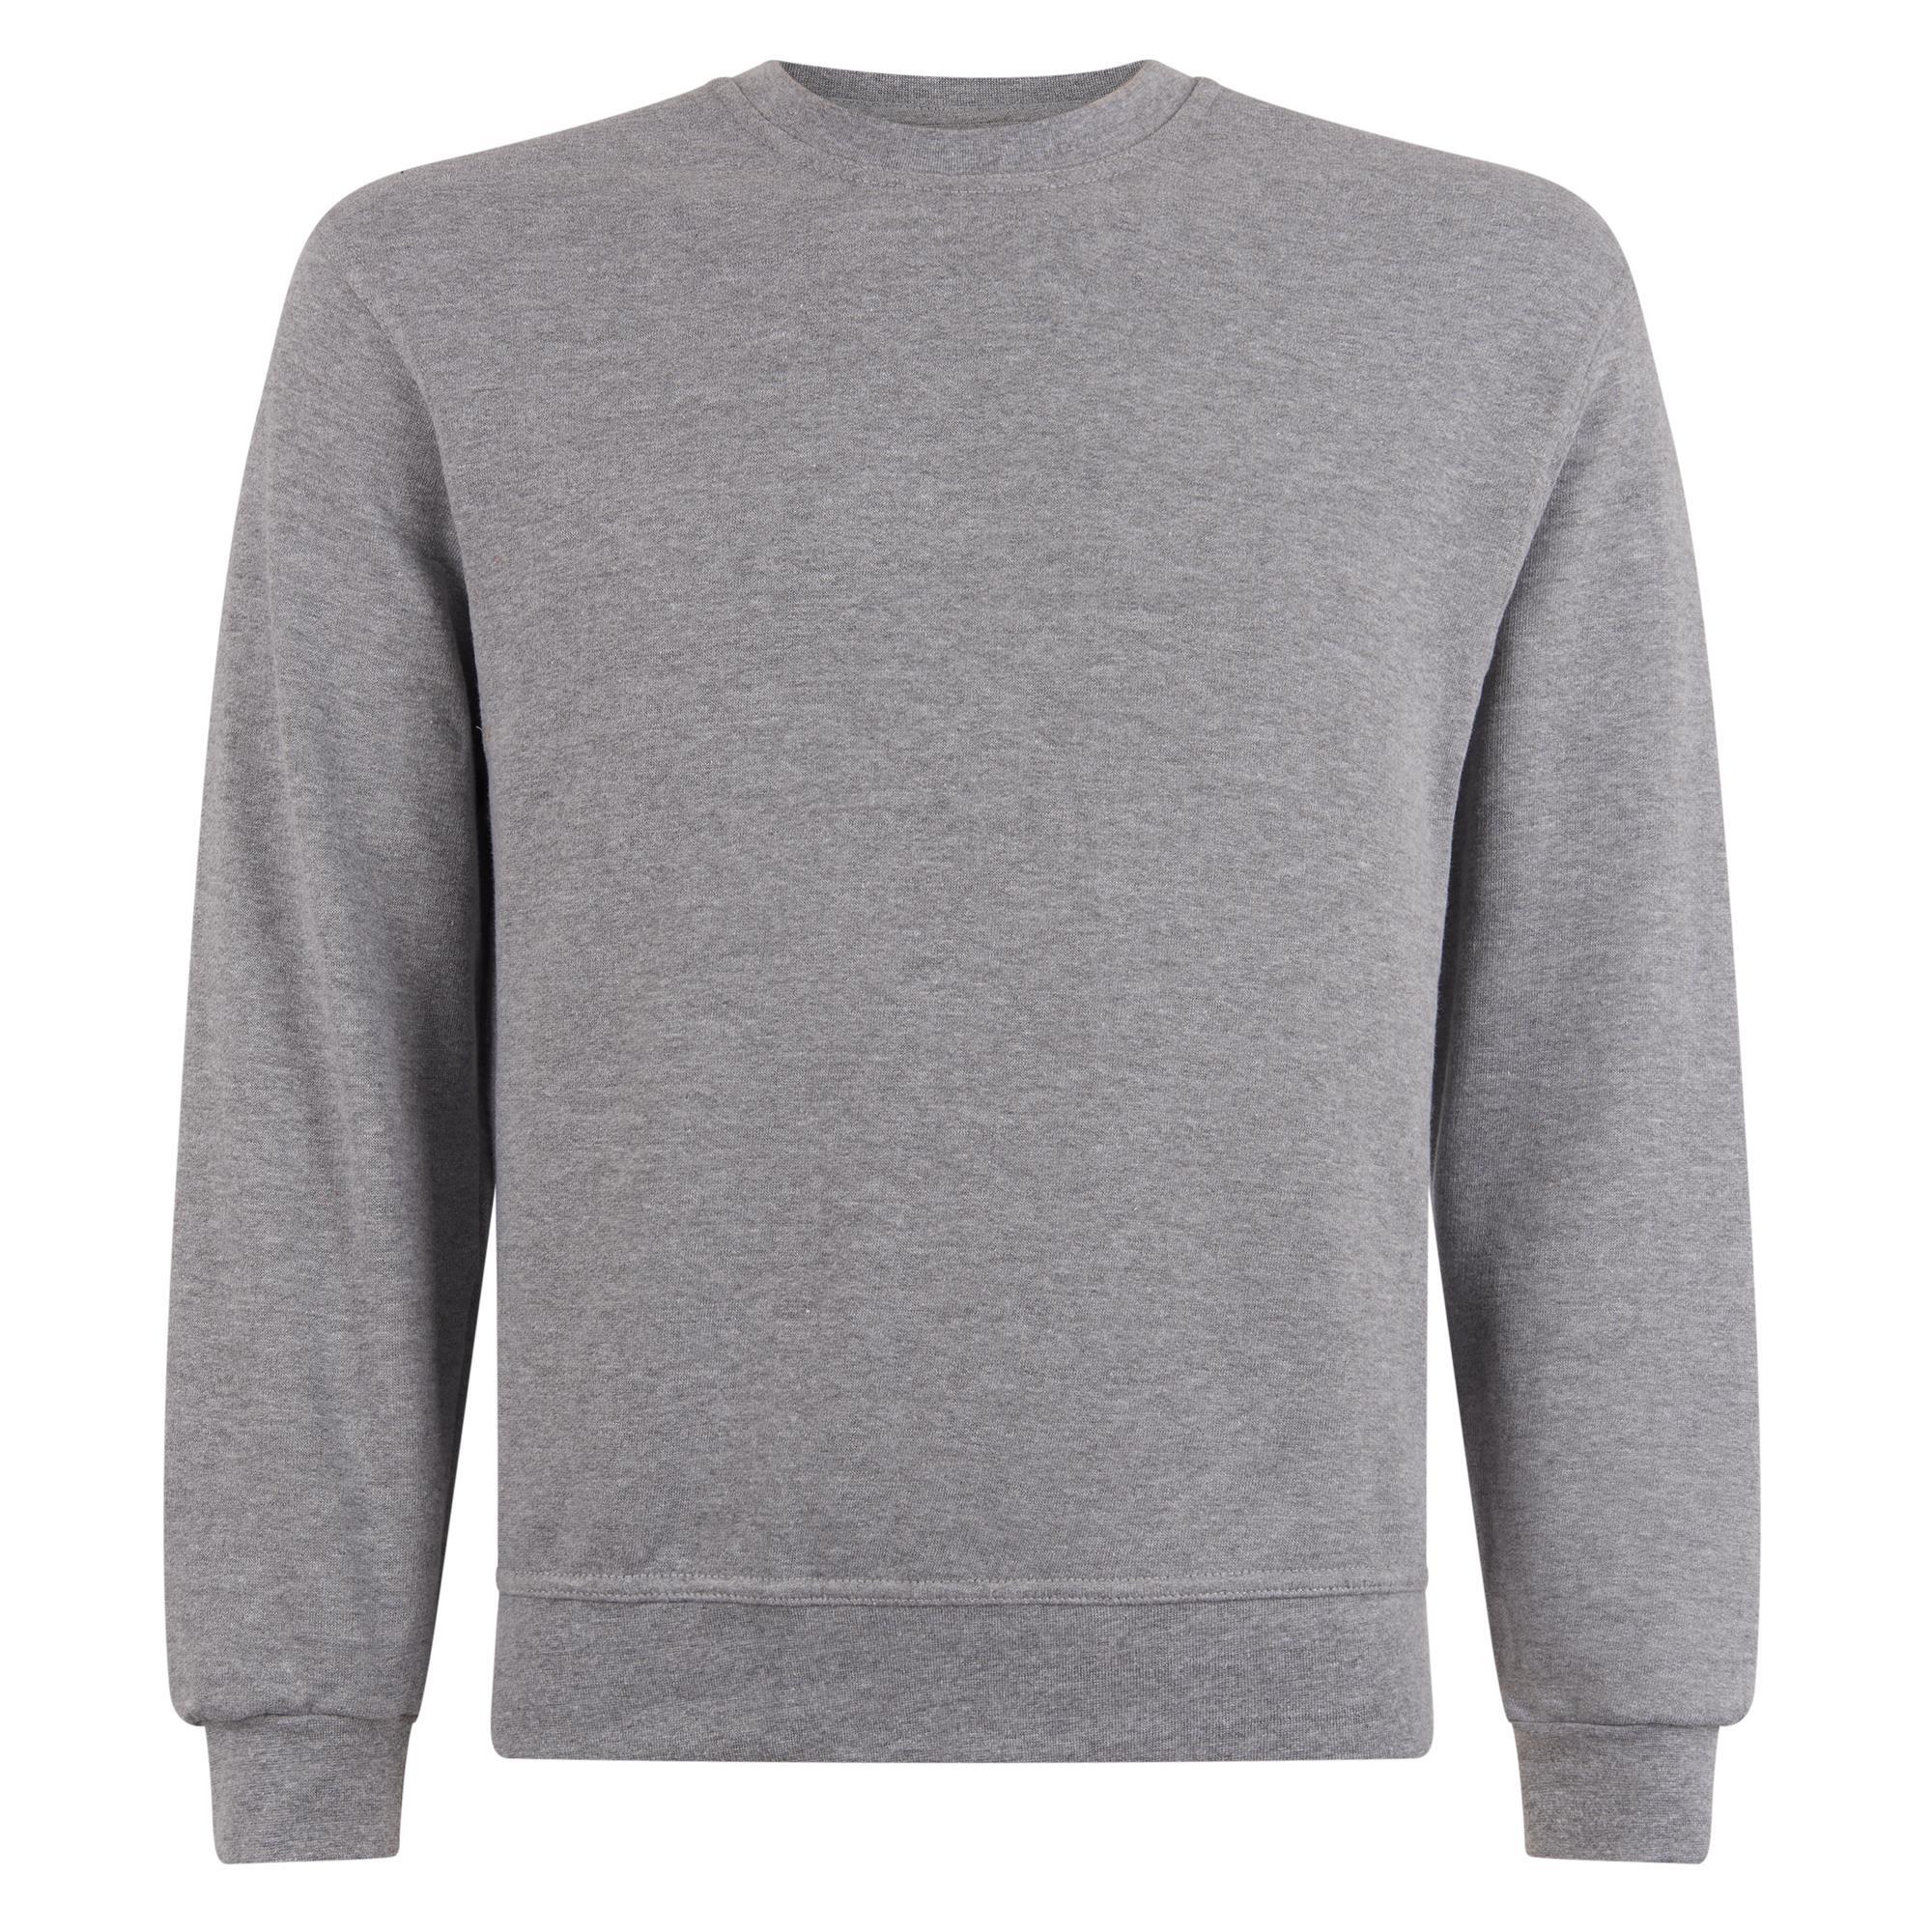 Sweater sports grey voor mannen Logostar